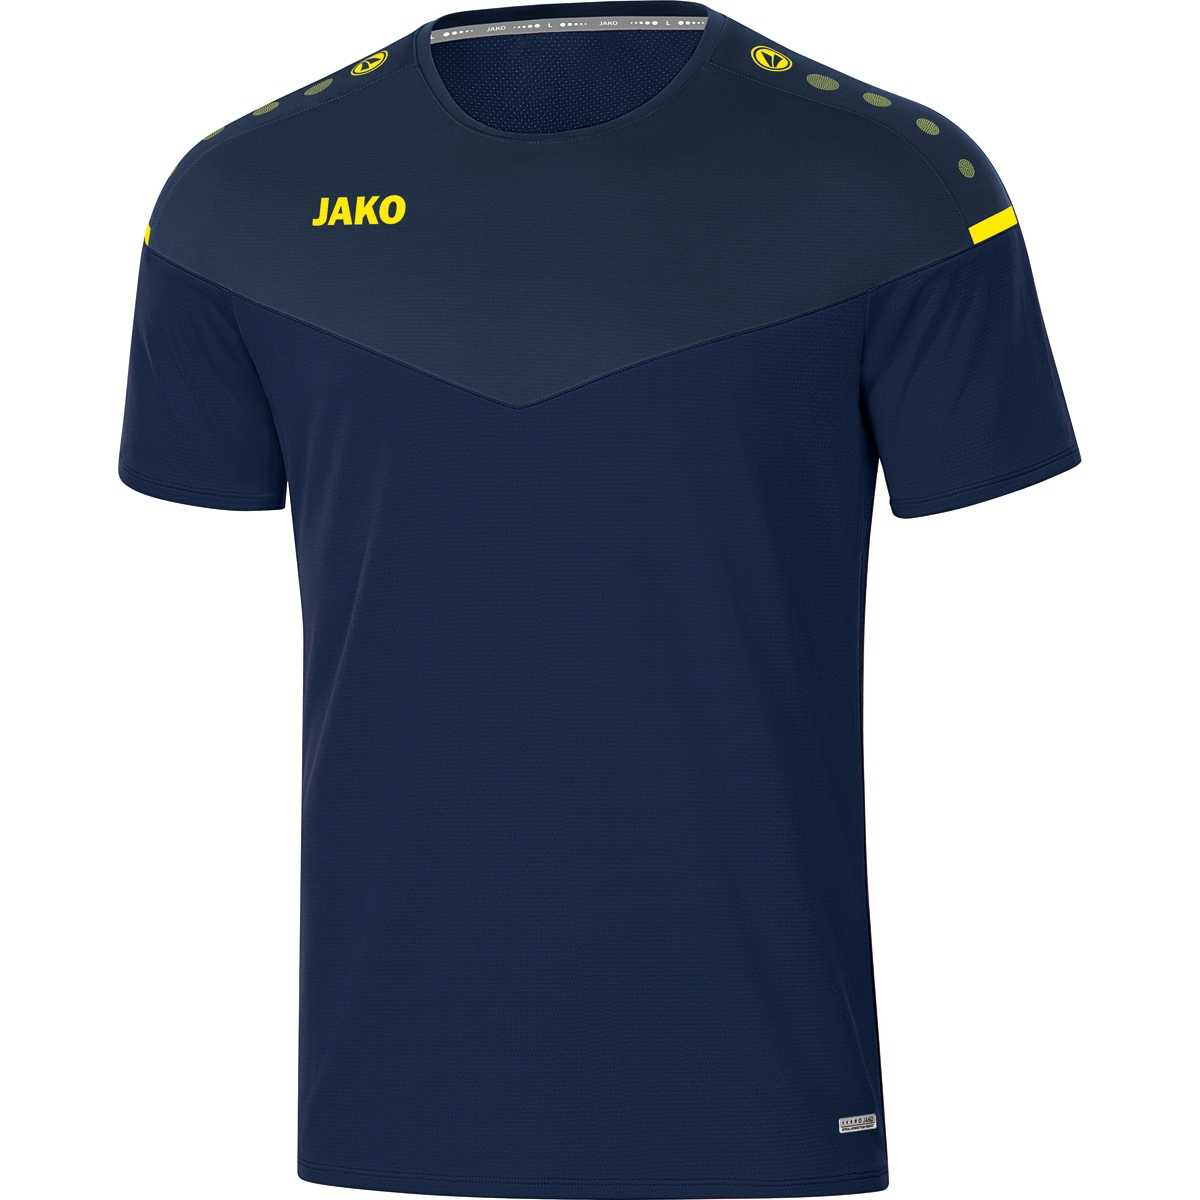 JAKO T-Shirt Champ 2.0 6120 marine/darkblue/neongelb, S, Herren, Gr